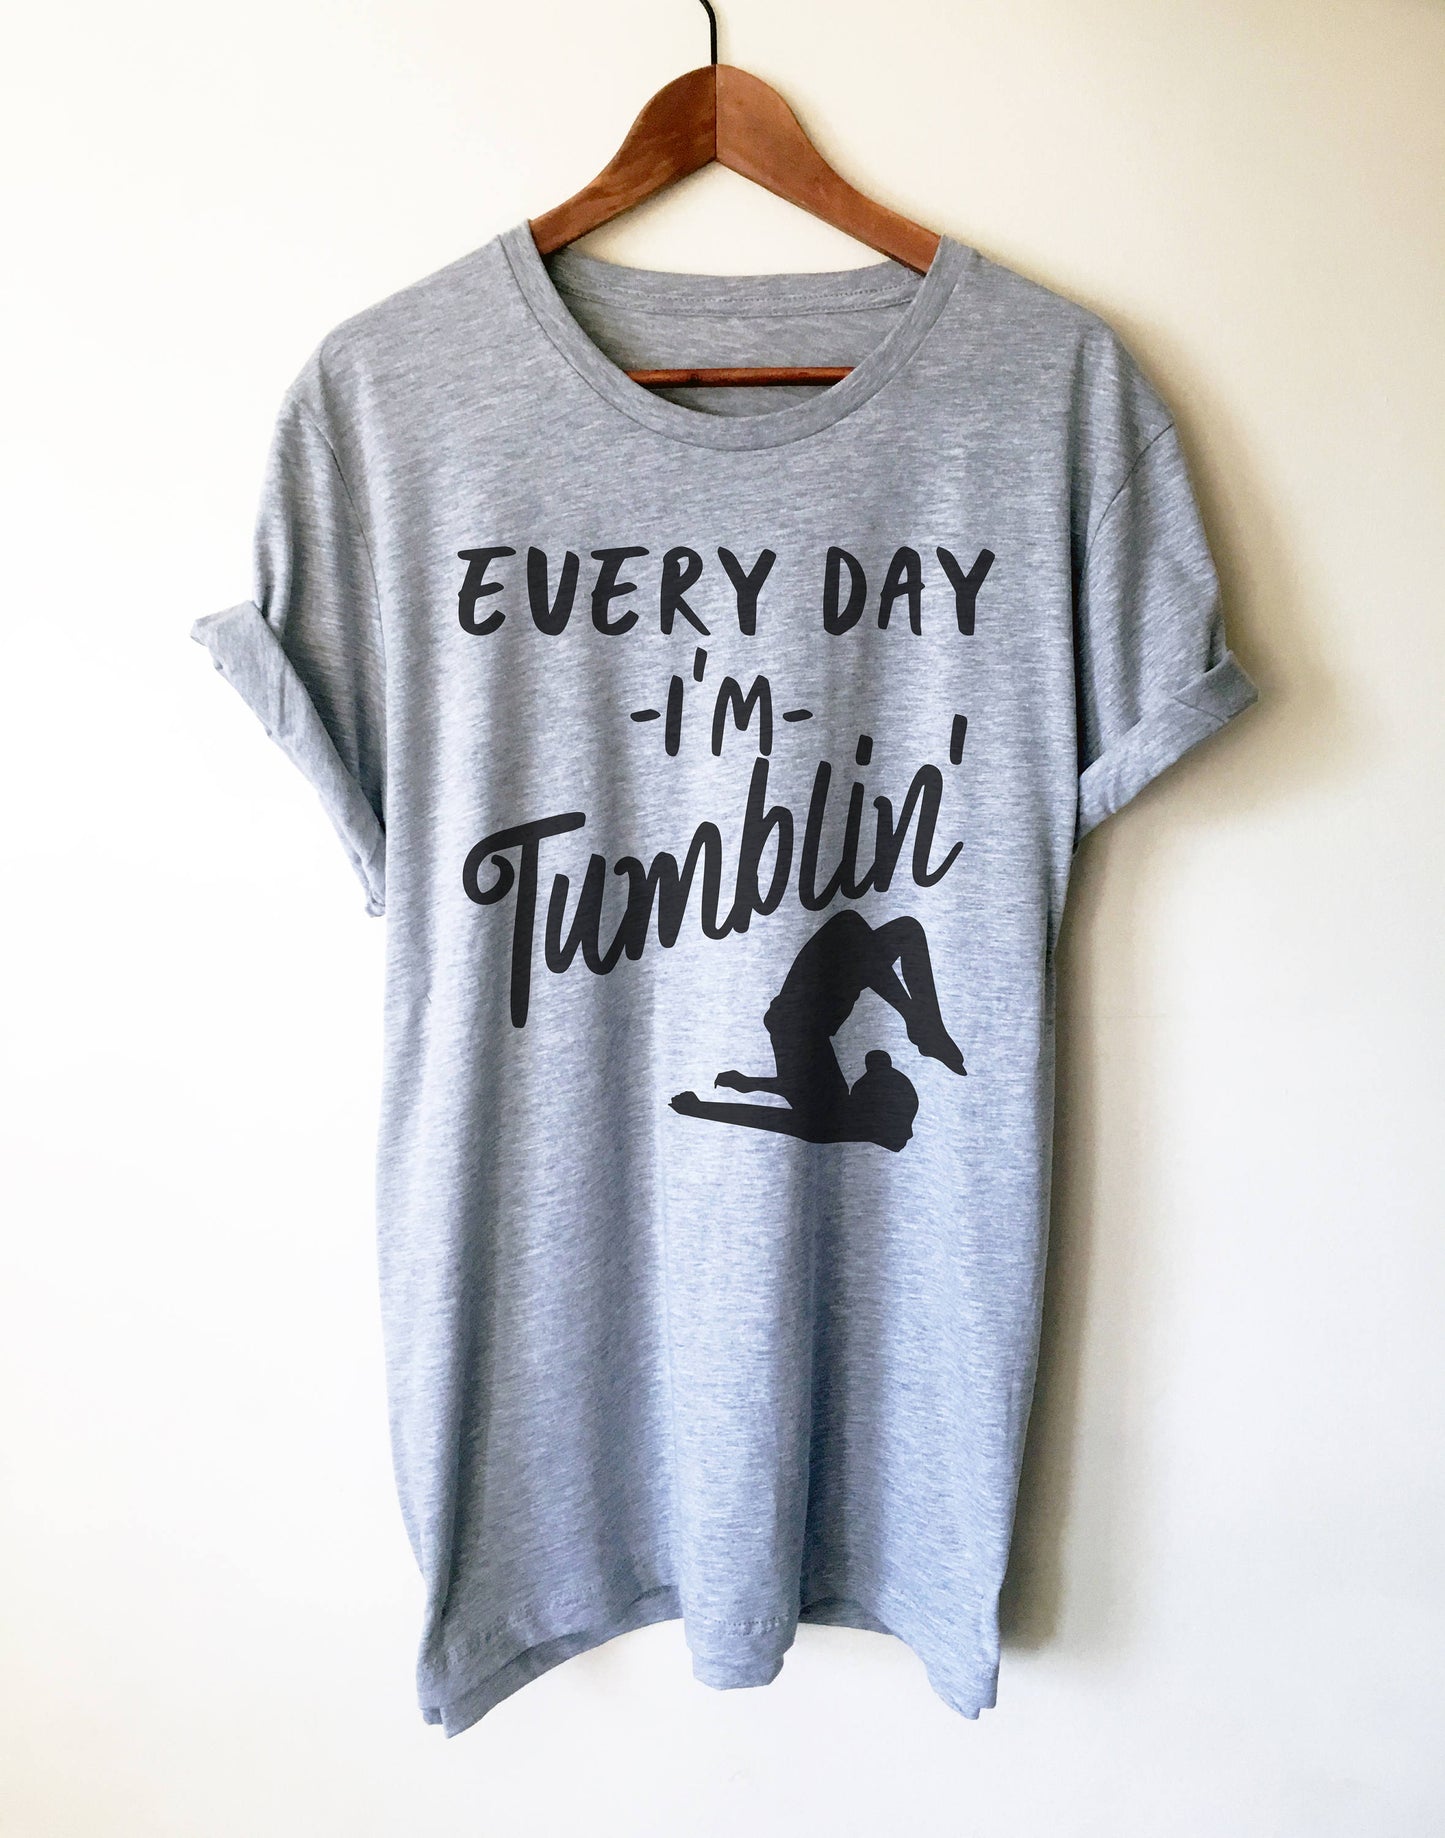 Every Day I'm Tumblin' Unisex Shirt - Gymnastics shirt, Gymnast shirt, Gymnastics gift, gymnastics gifts, gymnastics, gift for gymnast